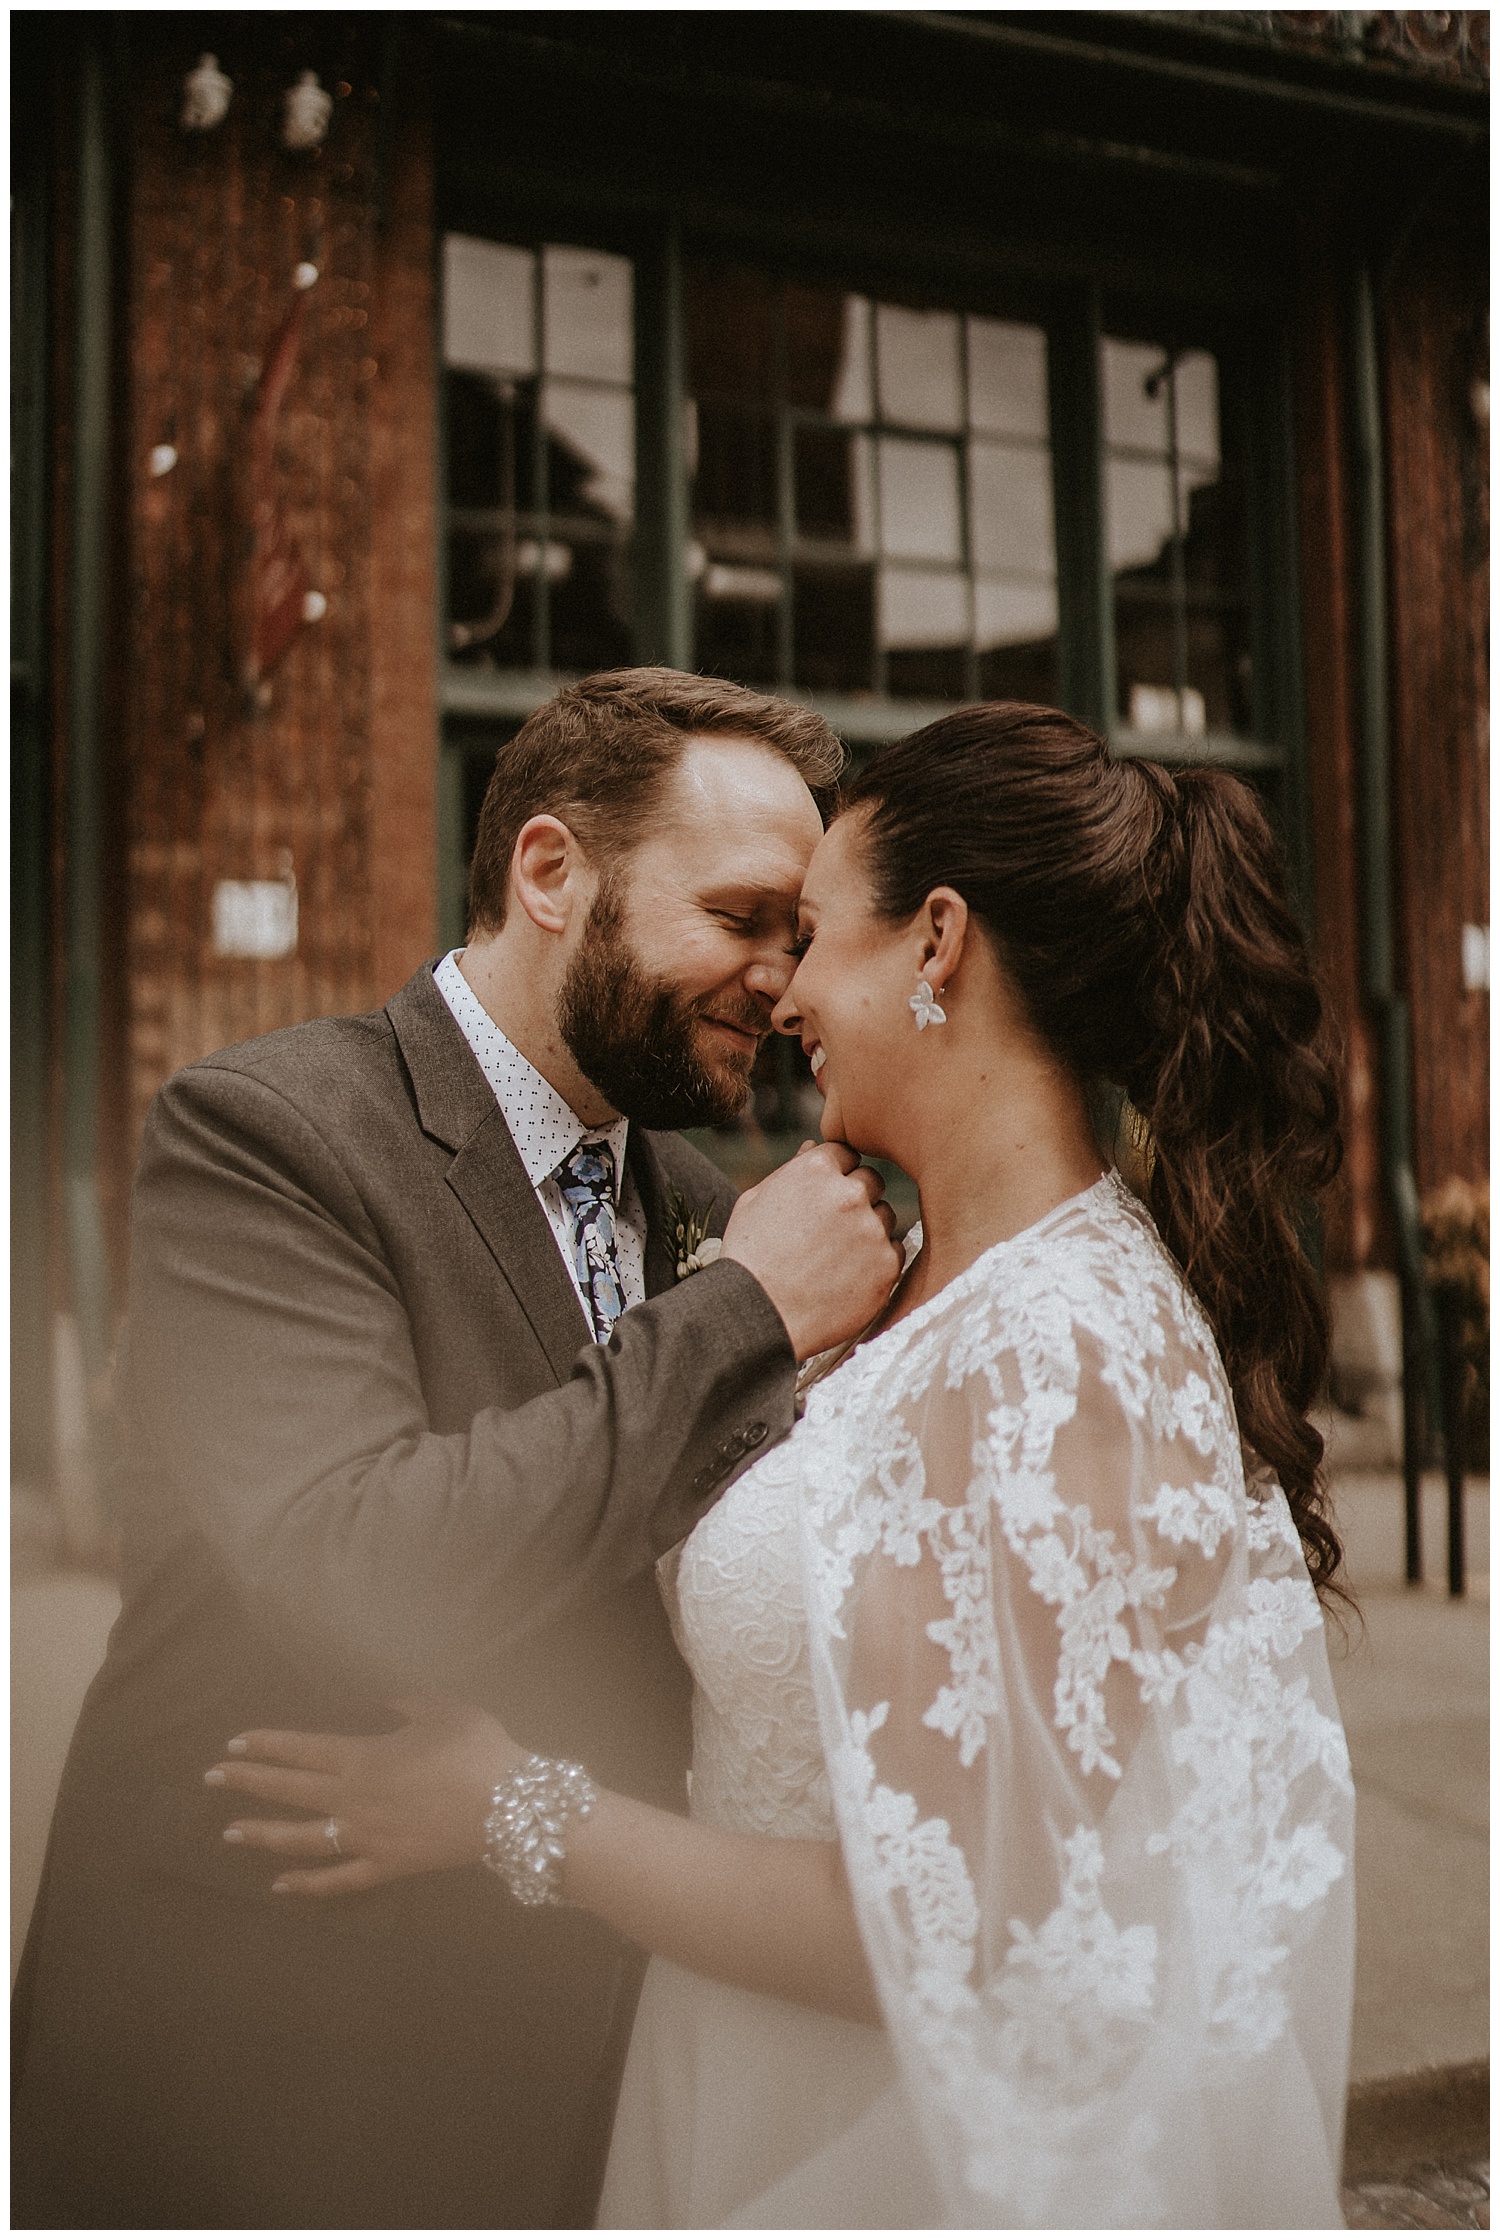 Katie Marie Photography | Archeo Wedding Arta Gallery Wedding | Distillery District Wedding | Toronto Wedding Photographer | Hamilton Toronto Ontario Wedding Photographer |_0075.jpg